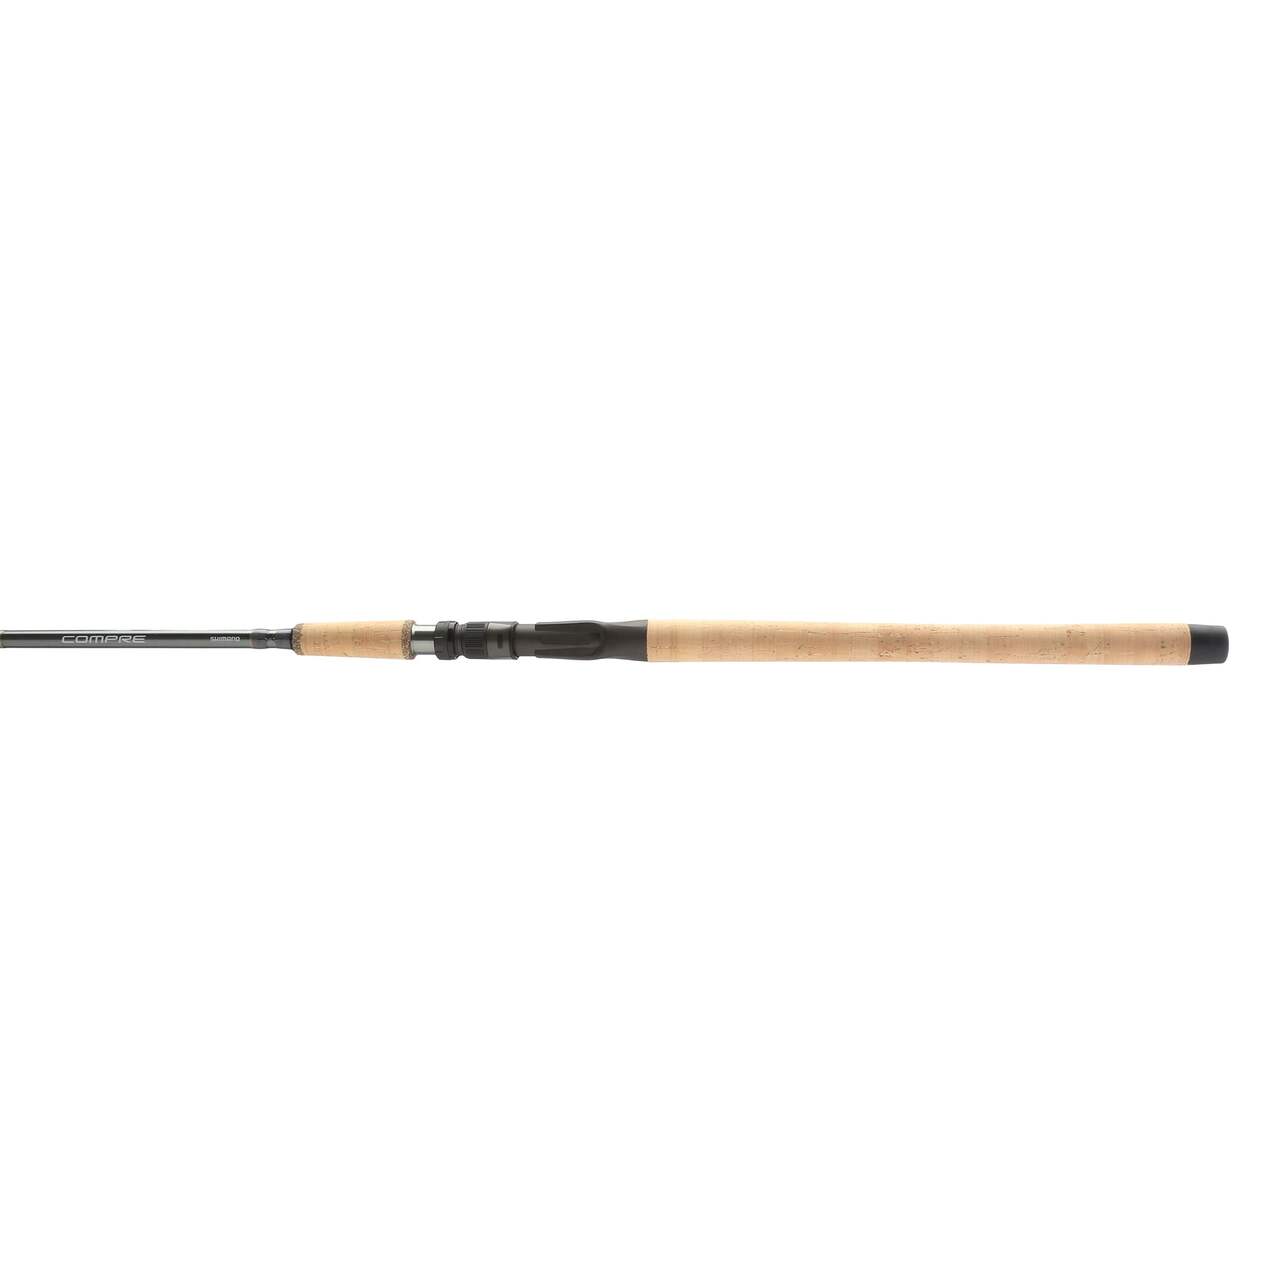 Shimano Compre BC Casting Fishing Rod with AAA Cork Handle, Medium